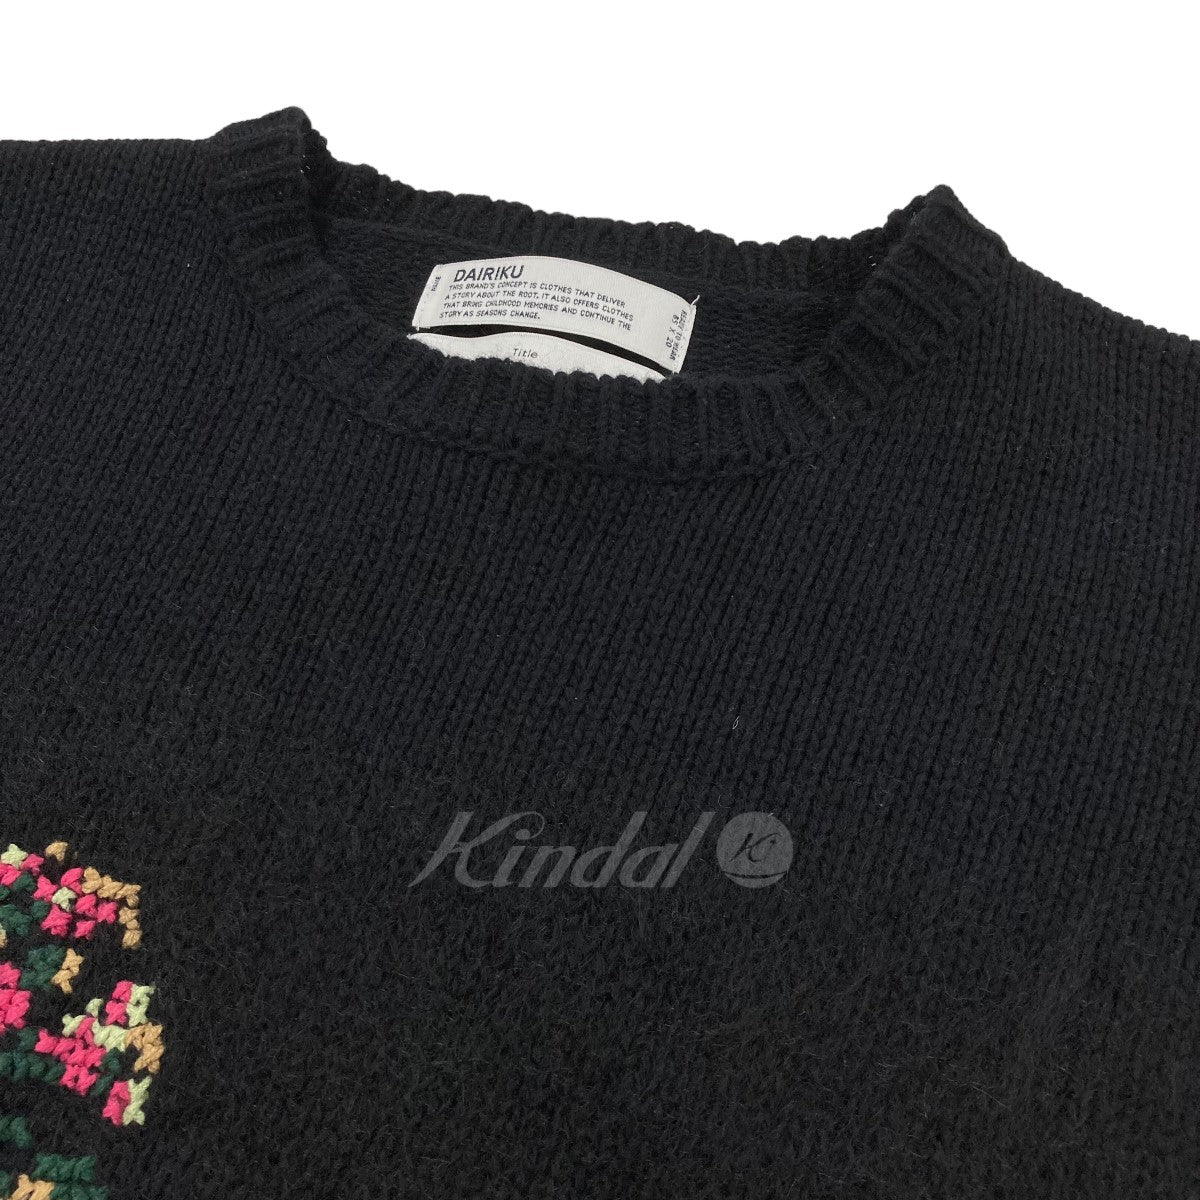 DAIRIKU(ダイリク) 2021AW 「Flower Cross Embroidery Knit」 フラワーニット